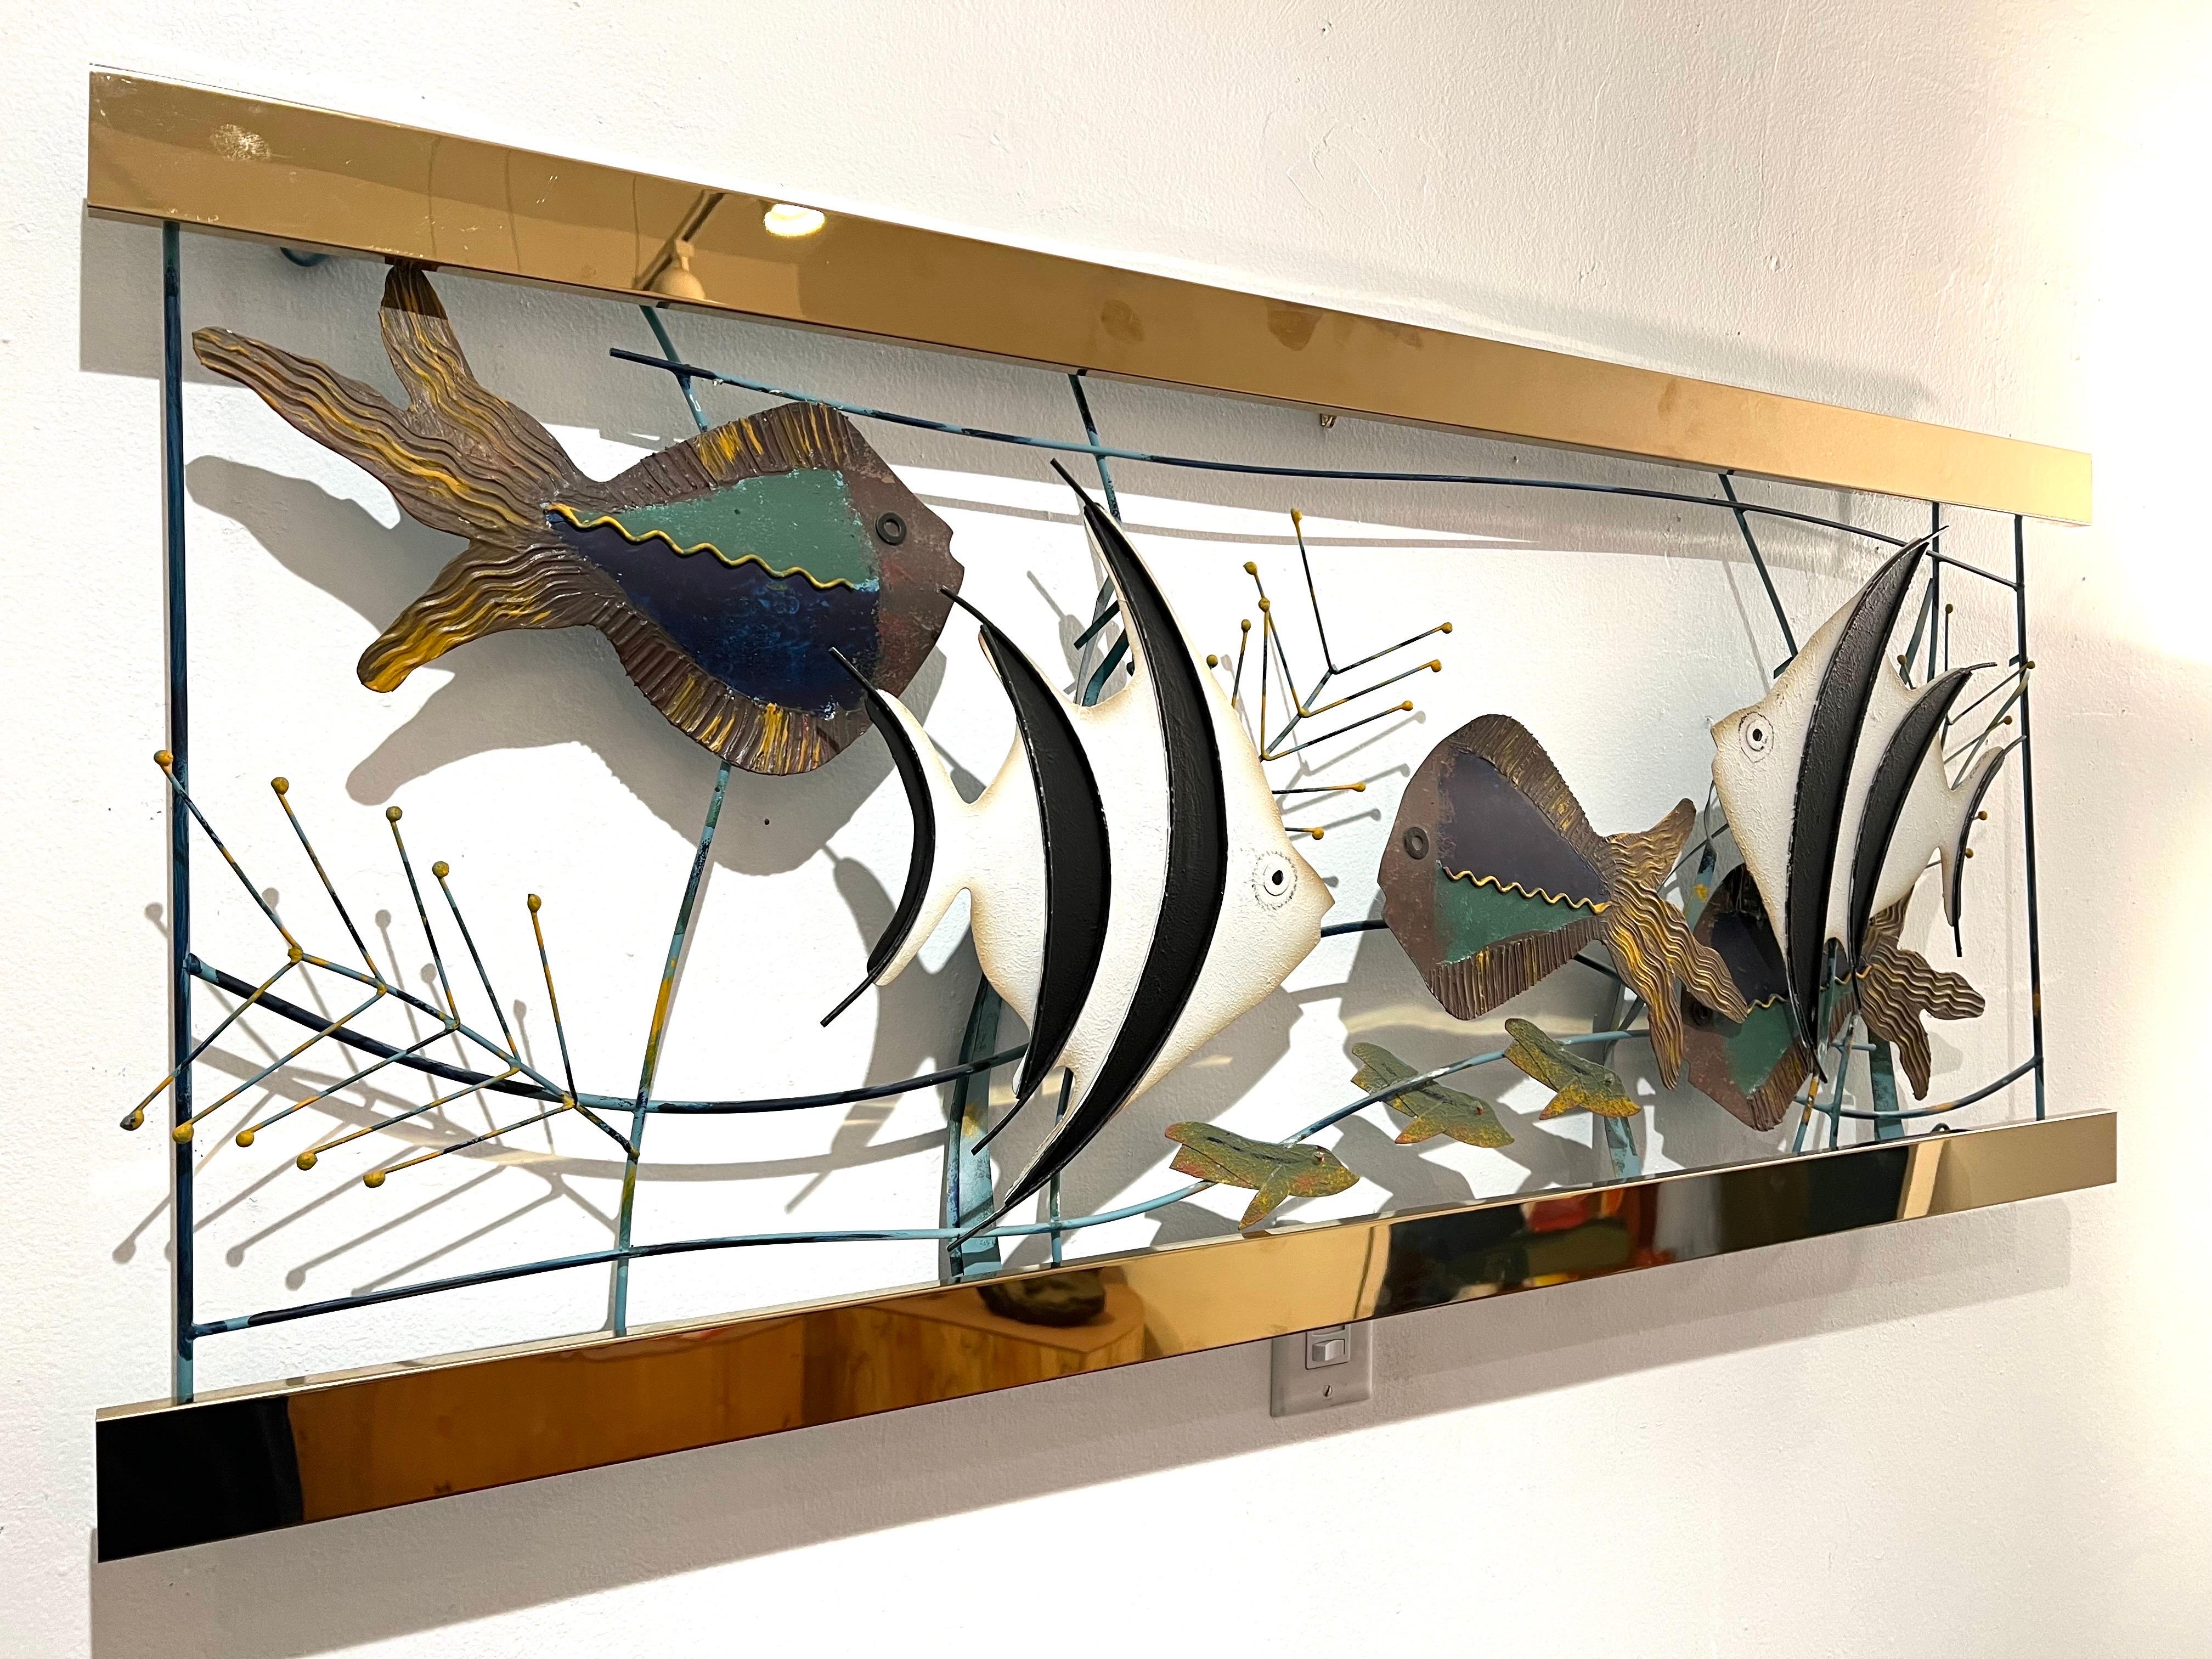 American Tropical Fish Aquarium Wall Sculpture Signed C. Jere & Dated 1997